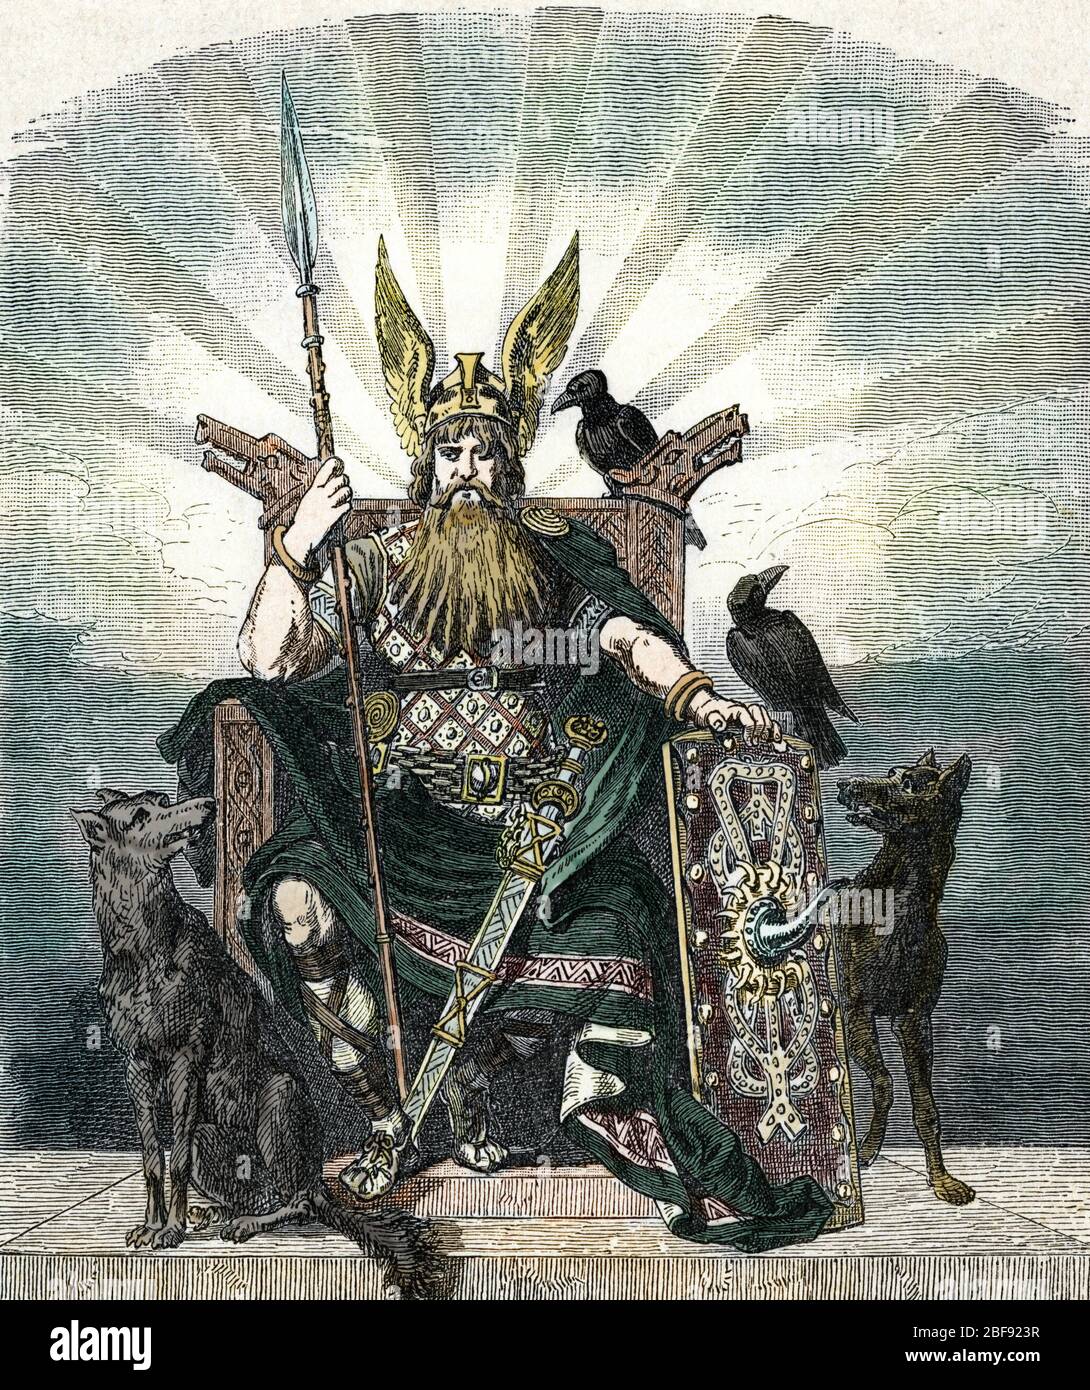 Mythologie nordique : Odin (Norse mythology : Odin) Gravure tiree de 'Nordisch-germanische Gotter und Helden' de Wilhelm wagner 1901 Collection privee Stock Photo